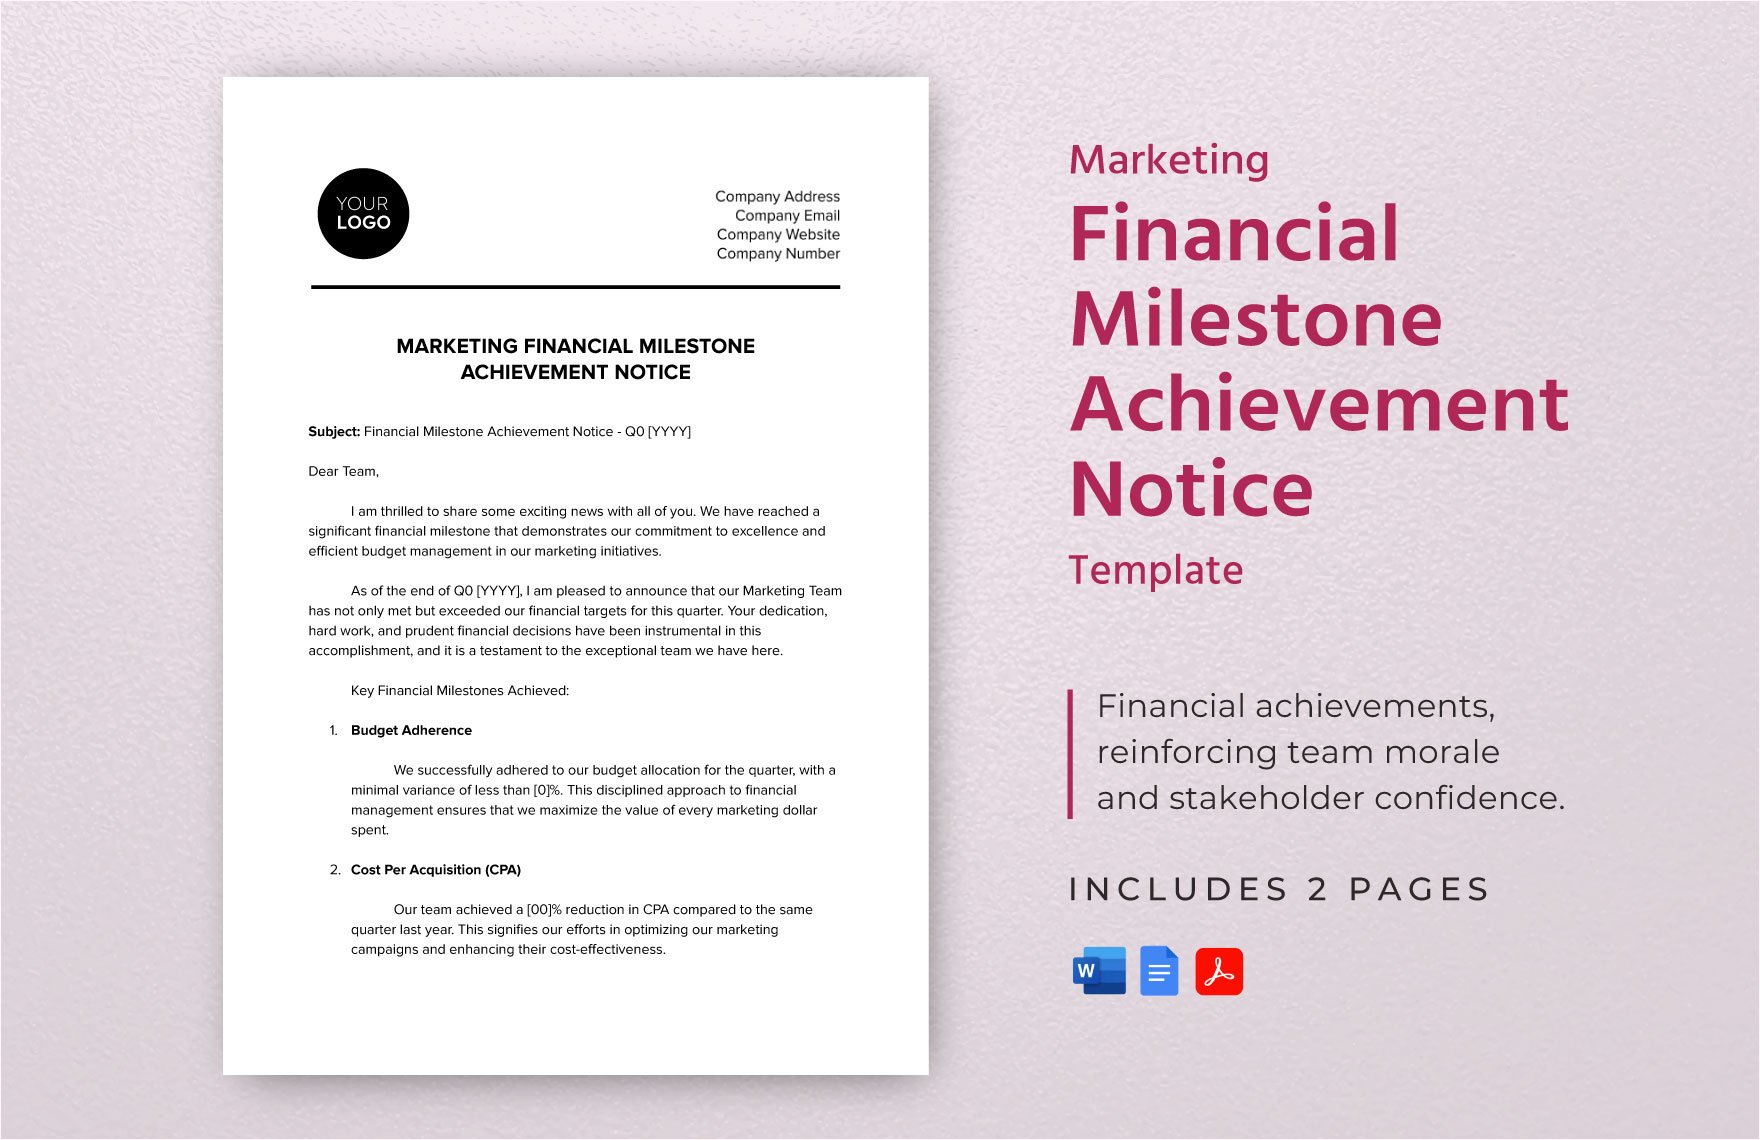 Marketing Financial Milestone Achievement Notice Template